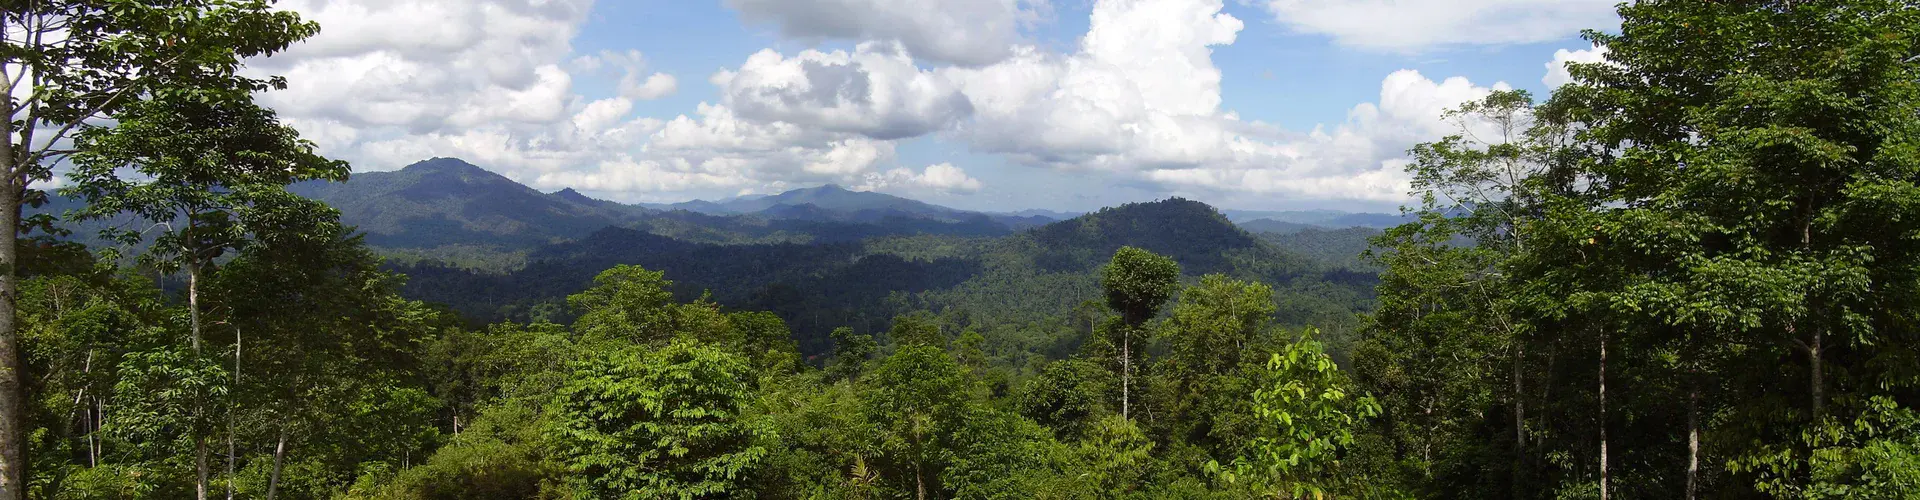 Borneo rainforest (Danum Valley) (Credit: Andrew Robinson)